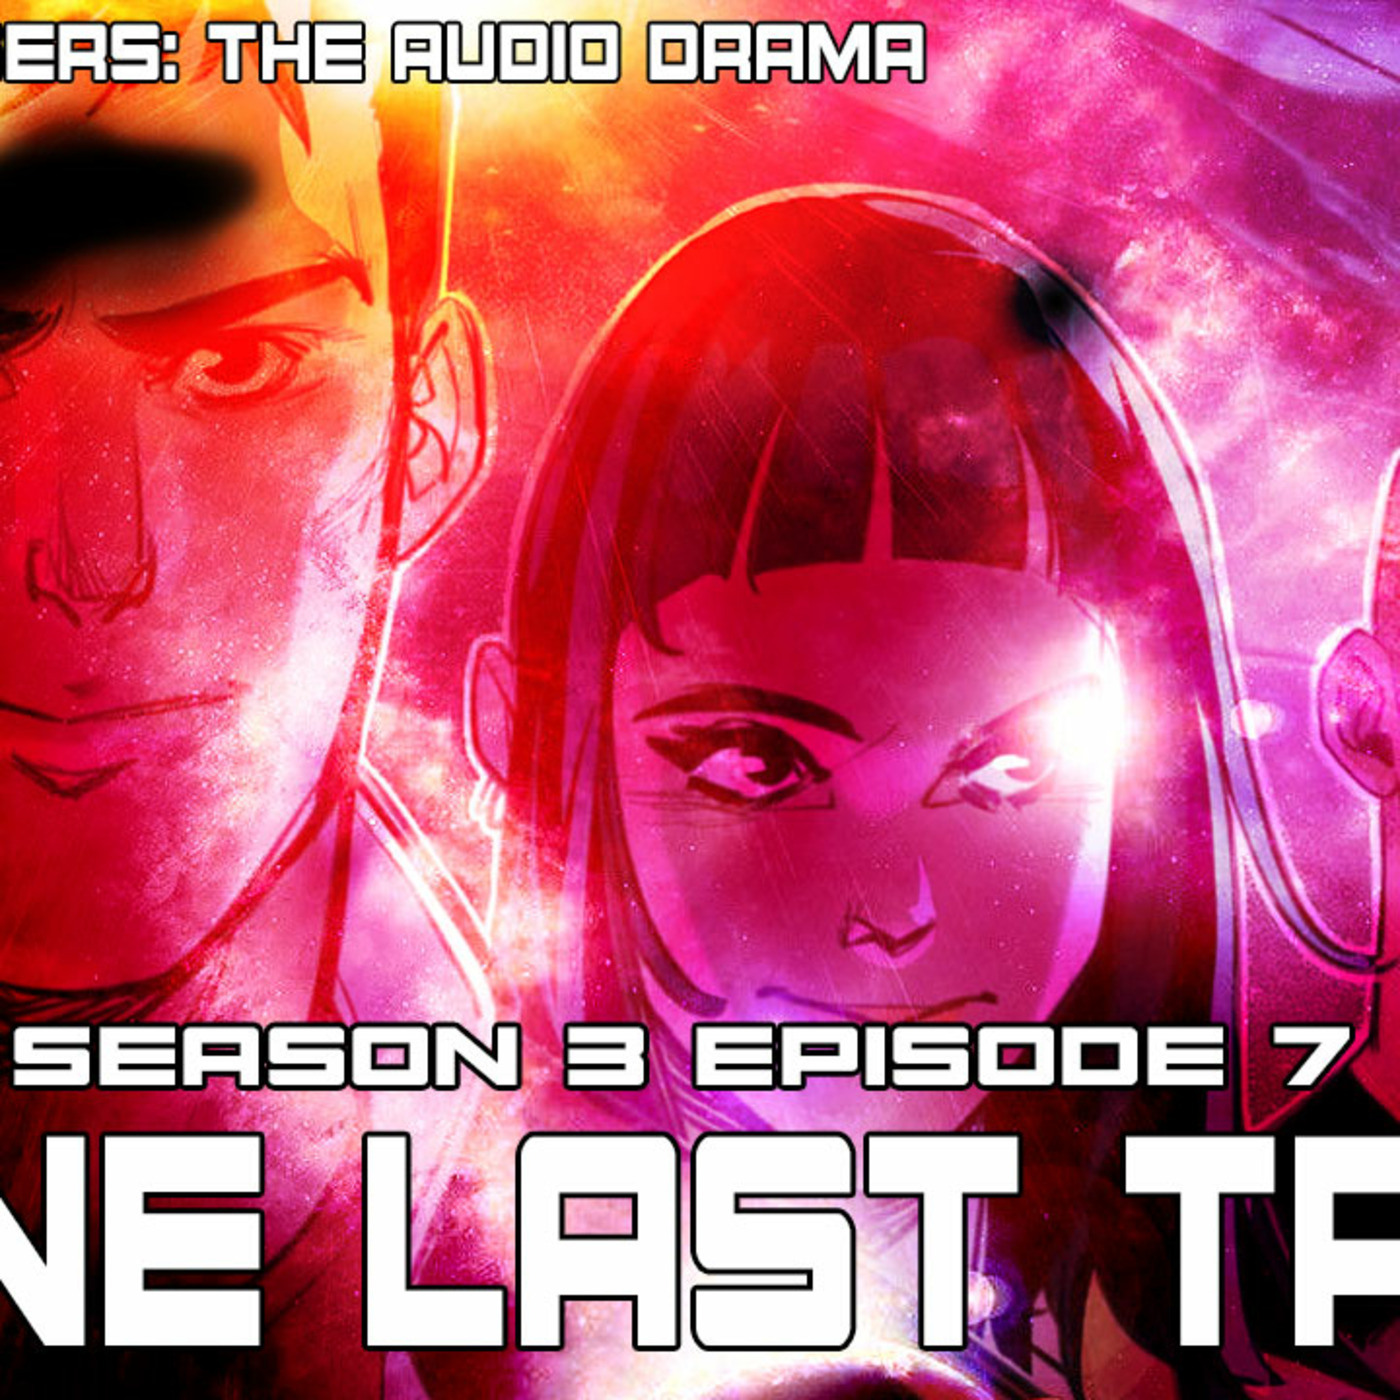 Episode 7: Season 3, Episode 7: One Last Trip